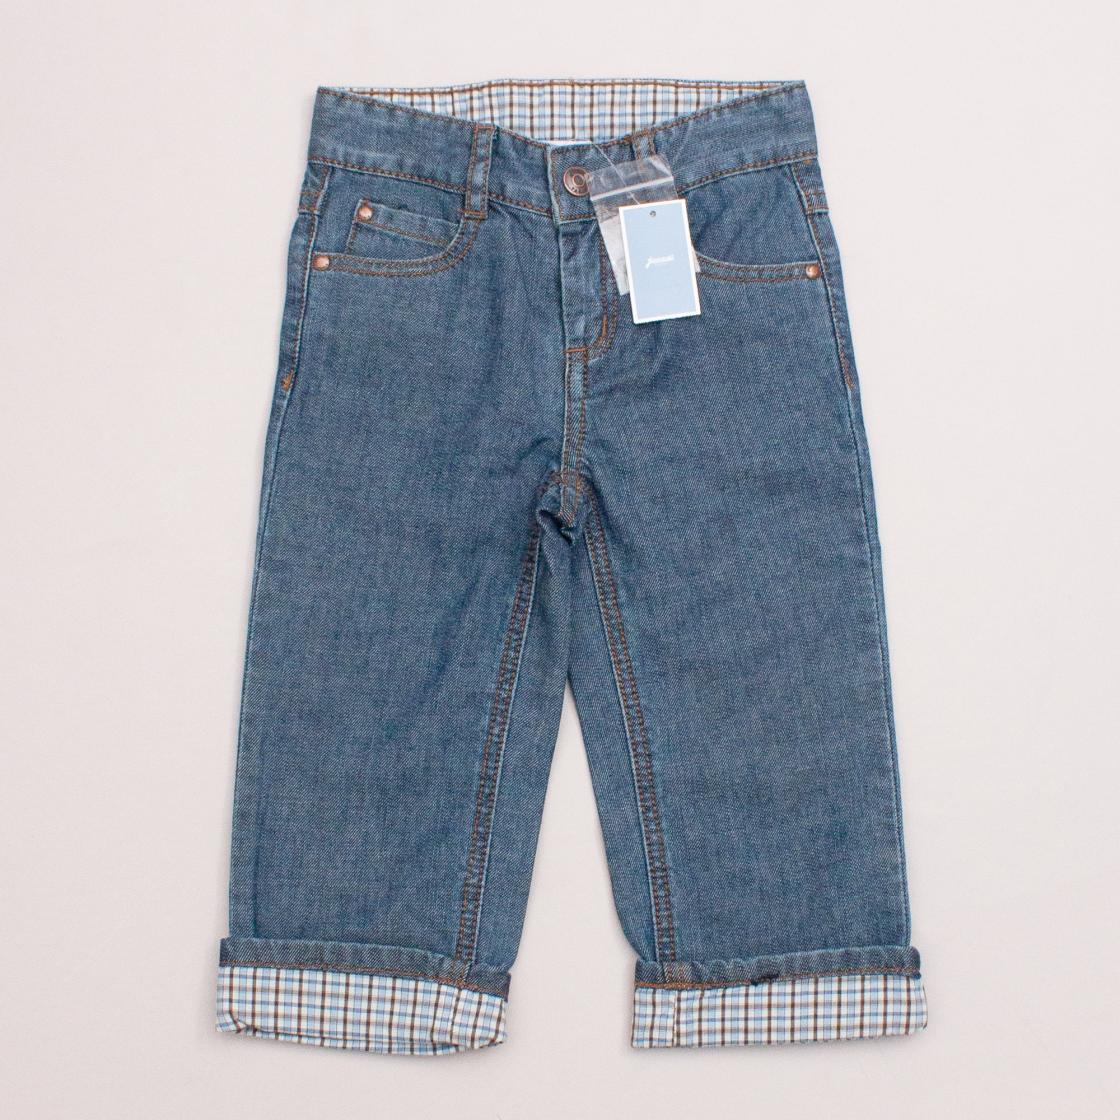 Jacadi Jeans "Brand New"